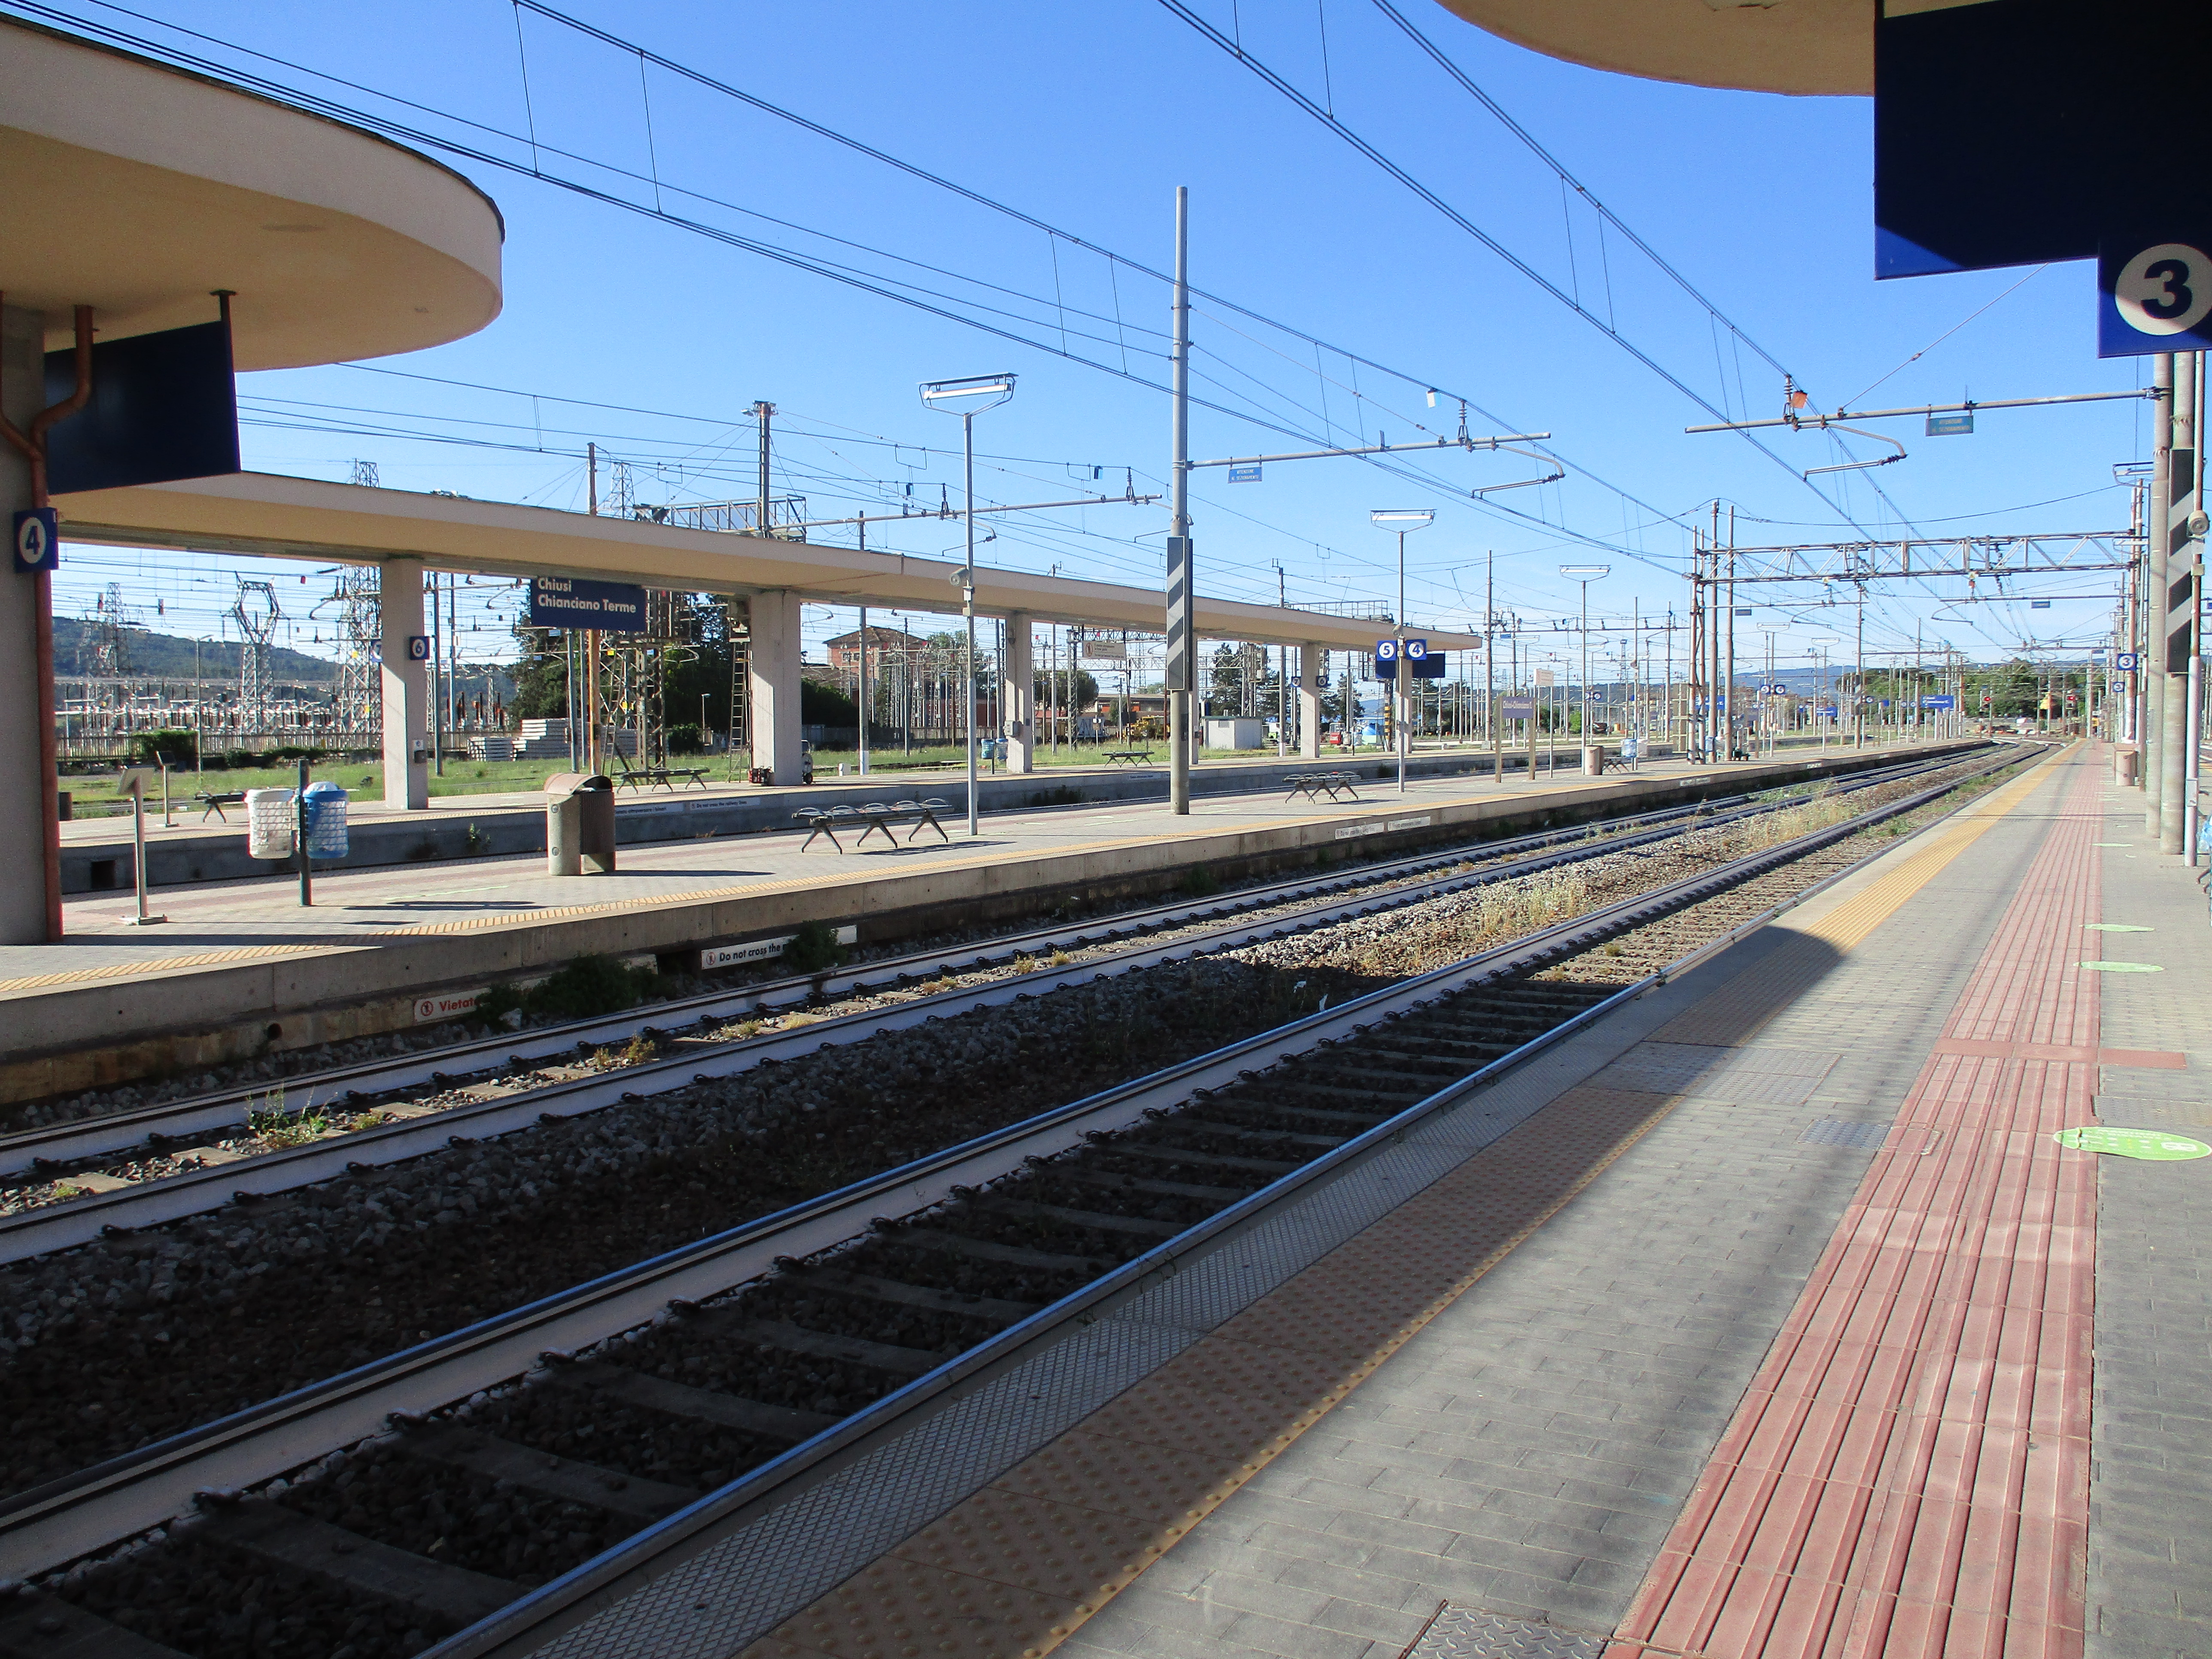 An empty train station underneath a clear blue sky. 